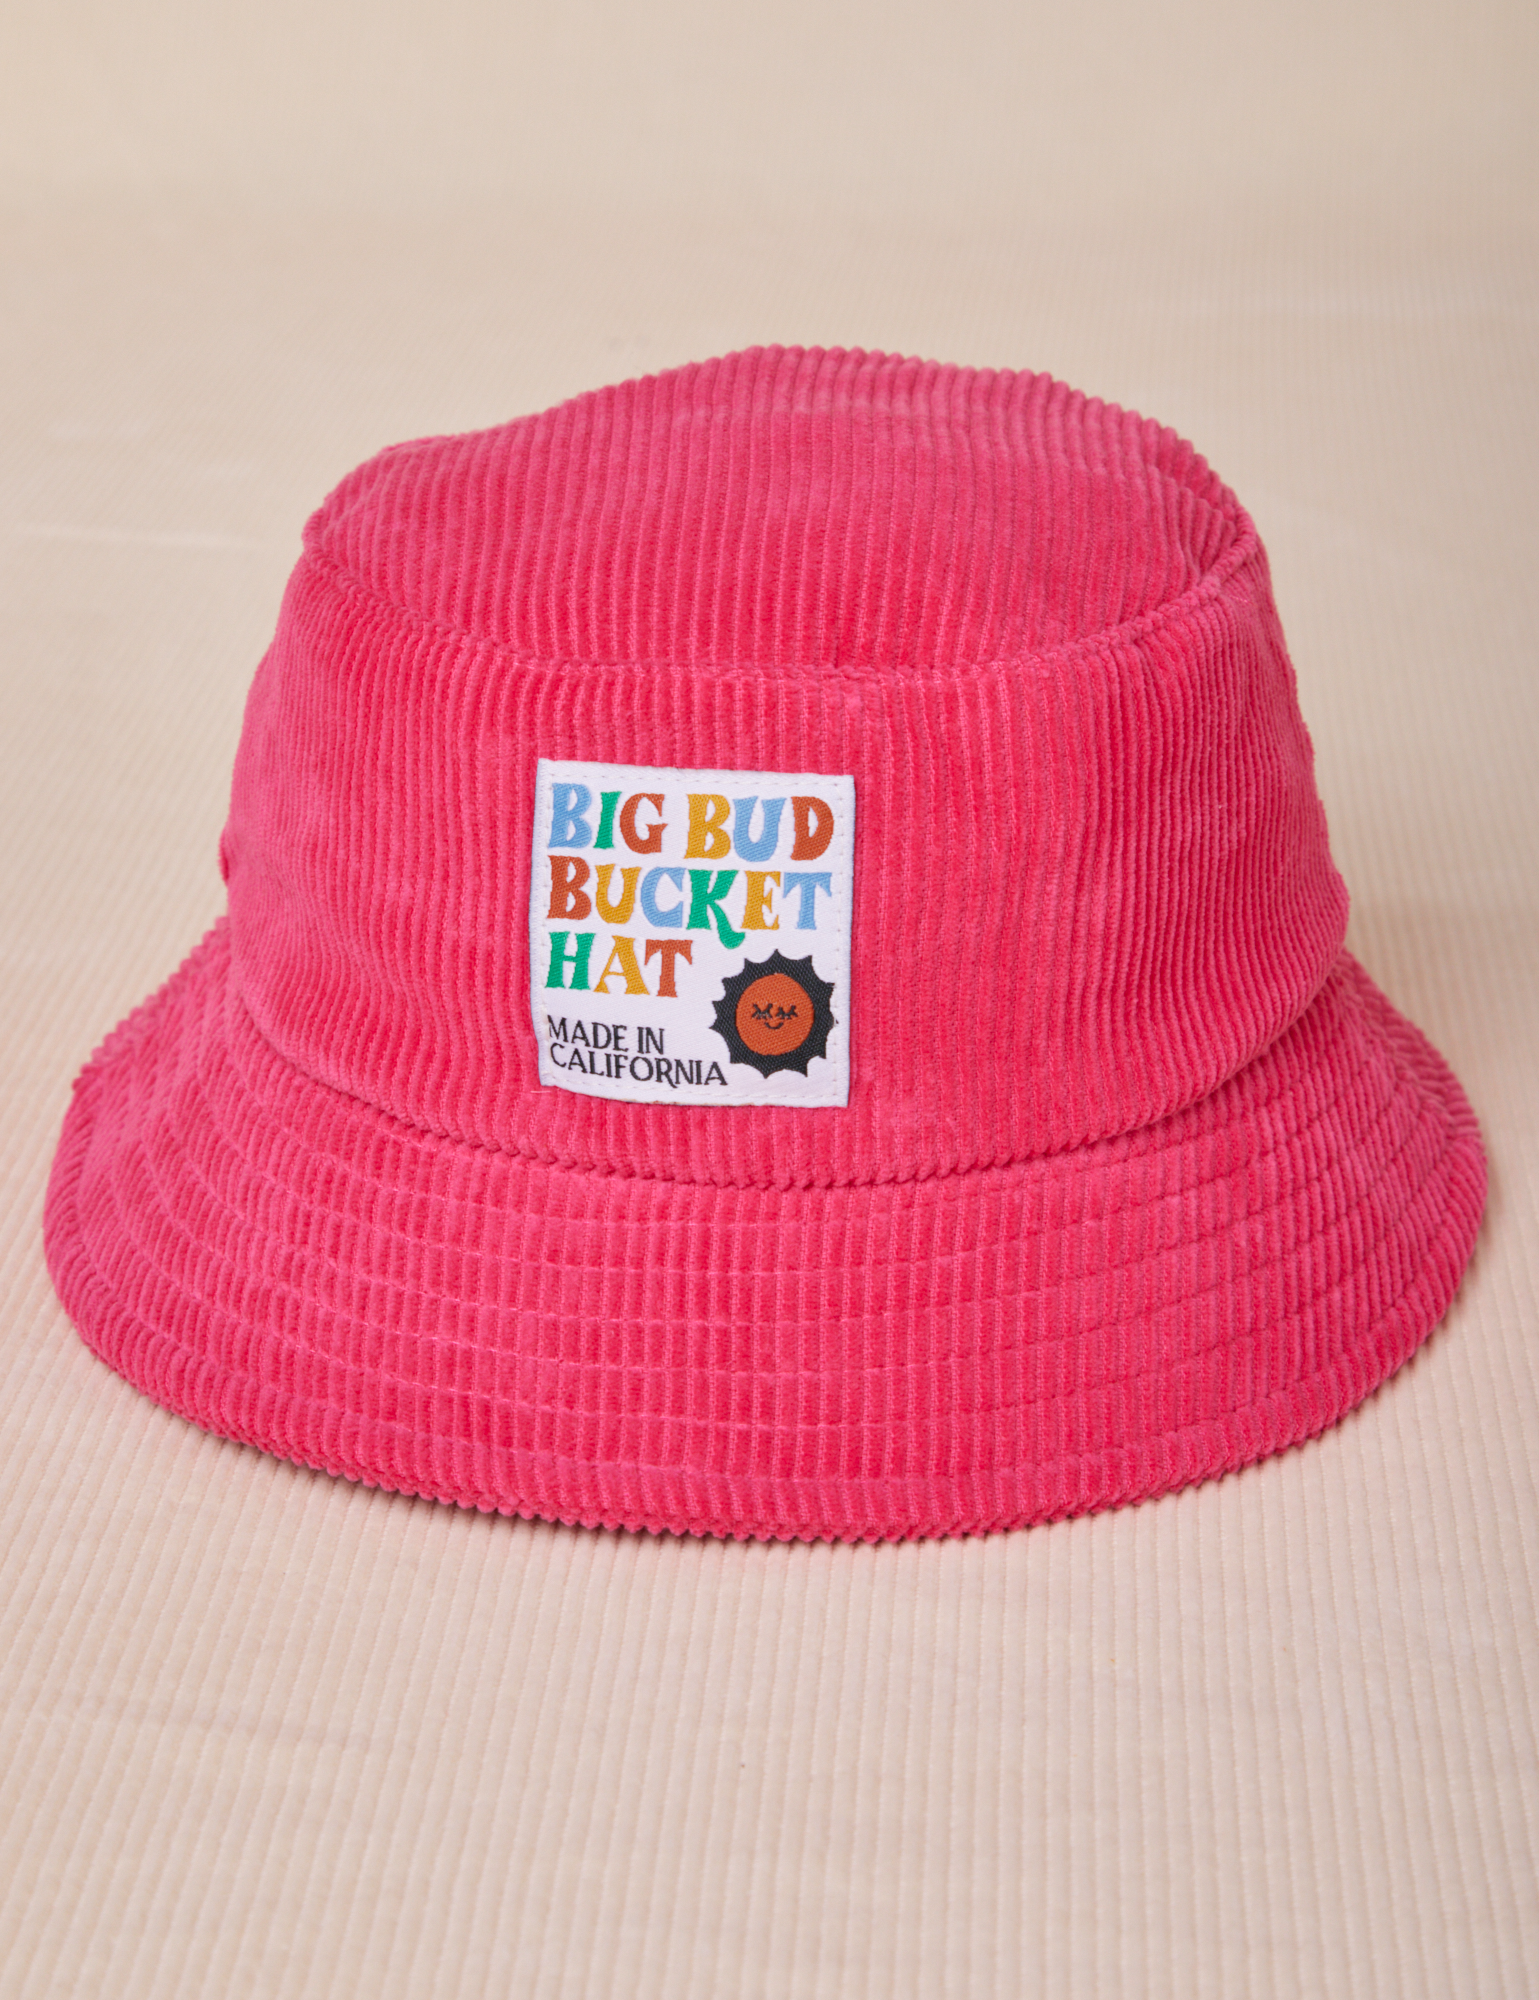 Big Bud Bucket Hat in hot pink